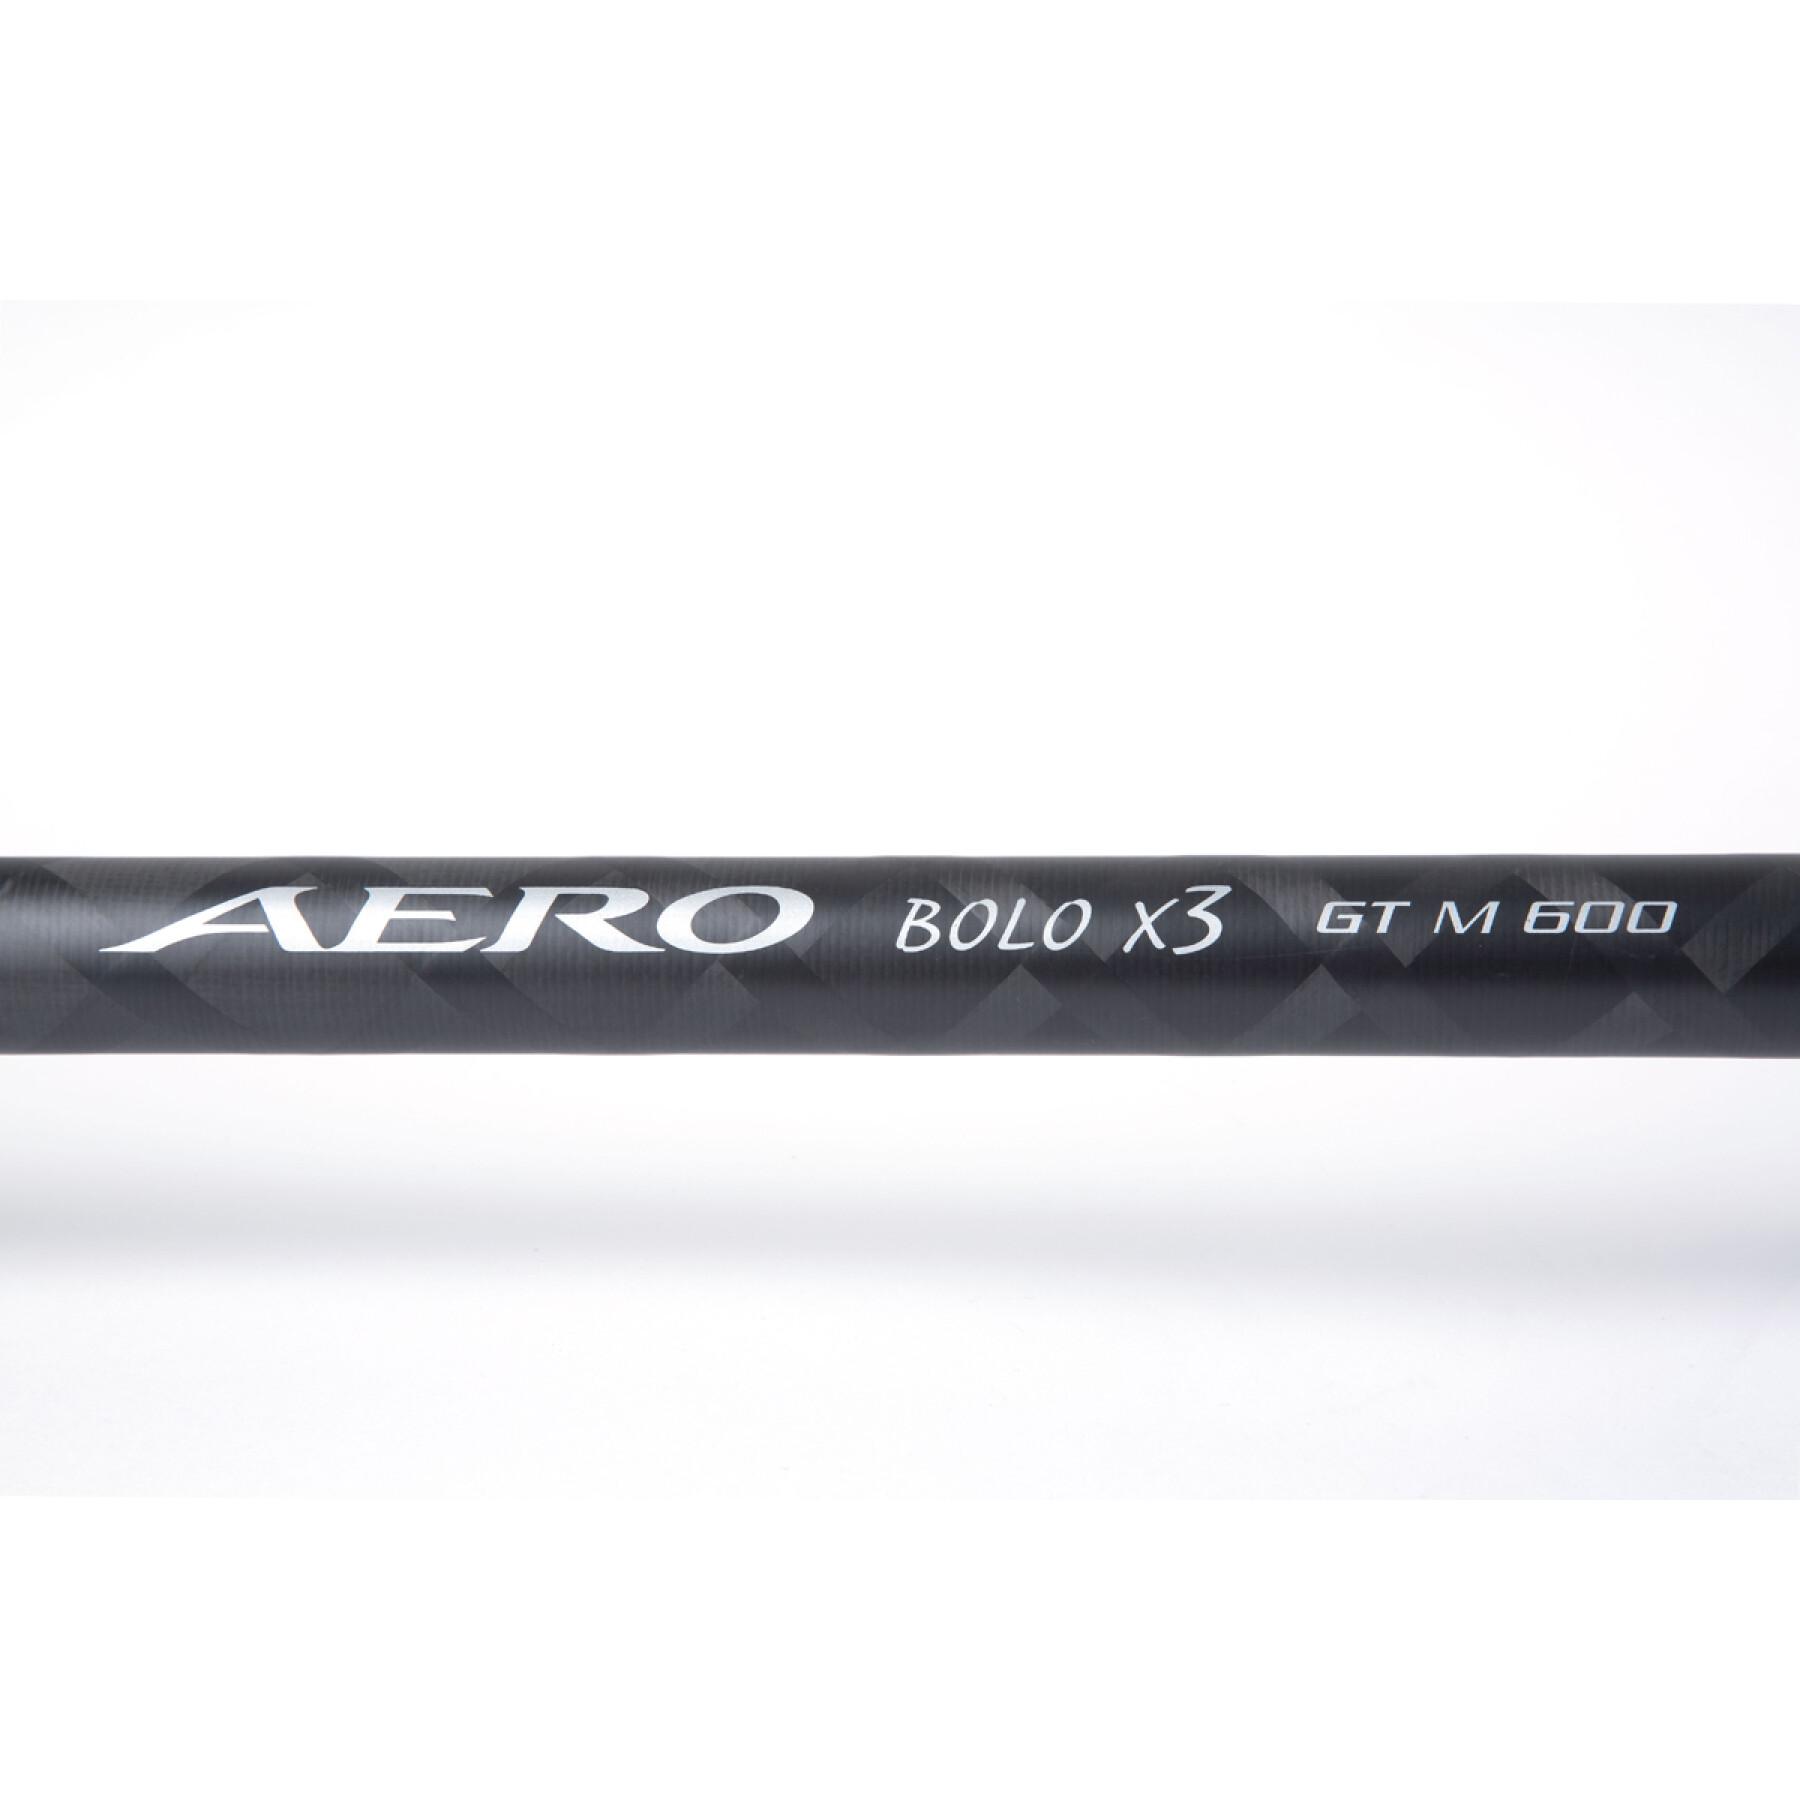 Teleskopisk stång Shimano Aero X3 Bolo GT 18 g